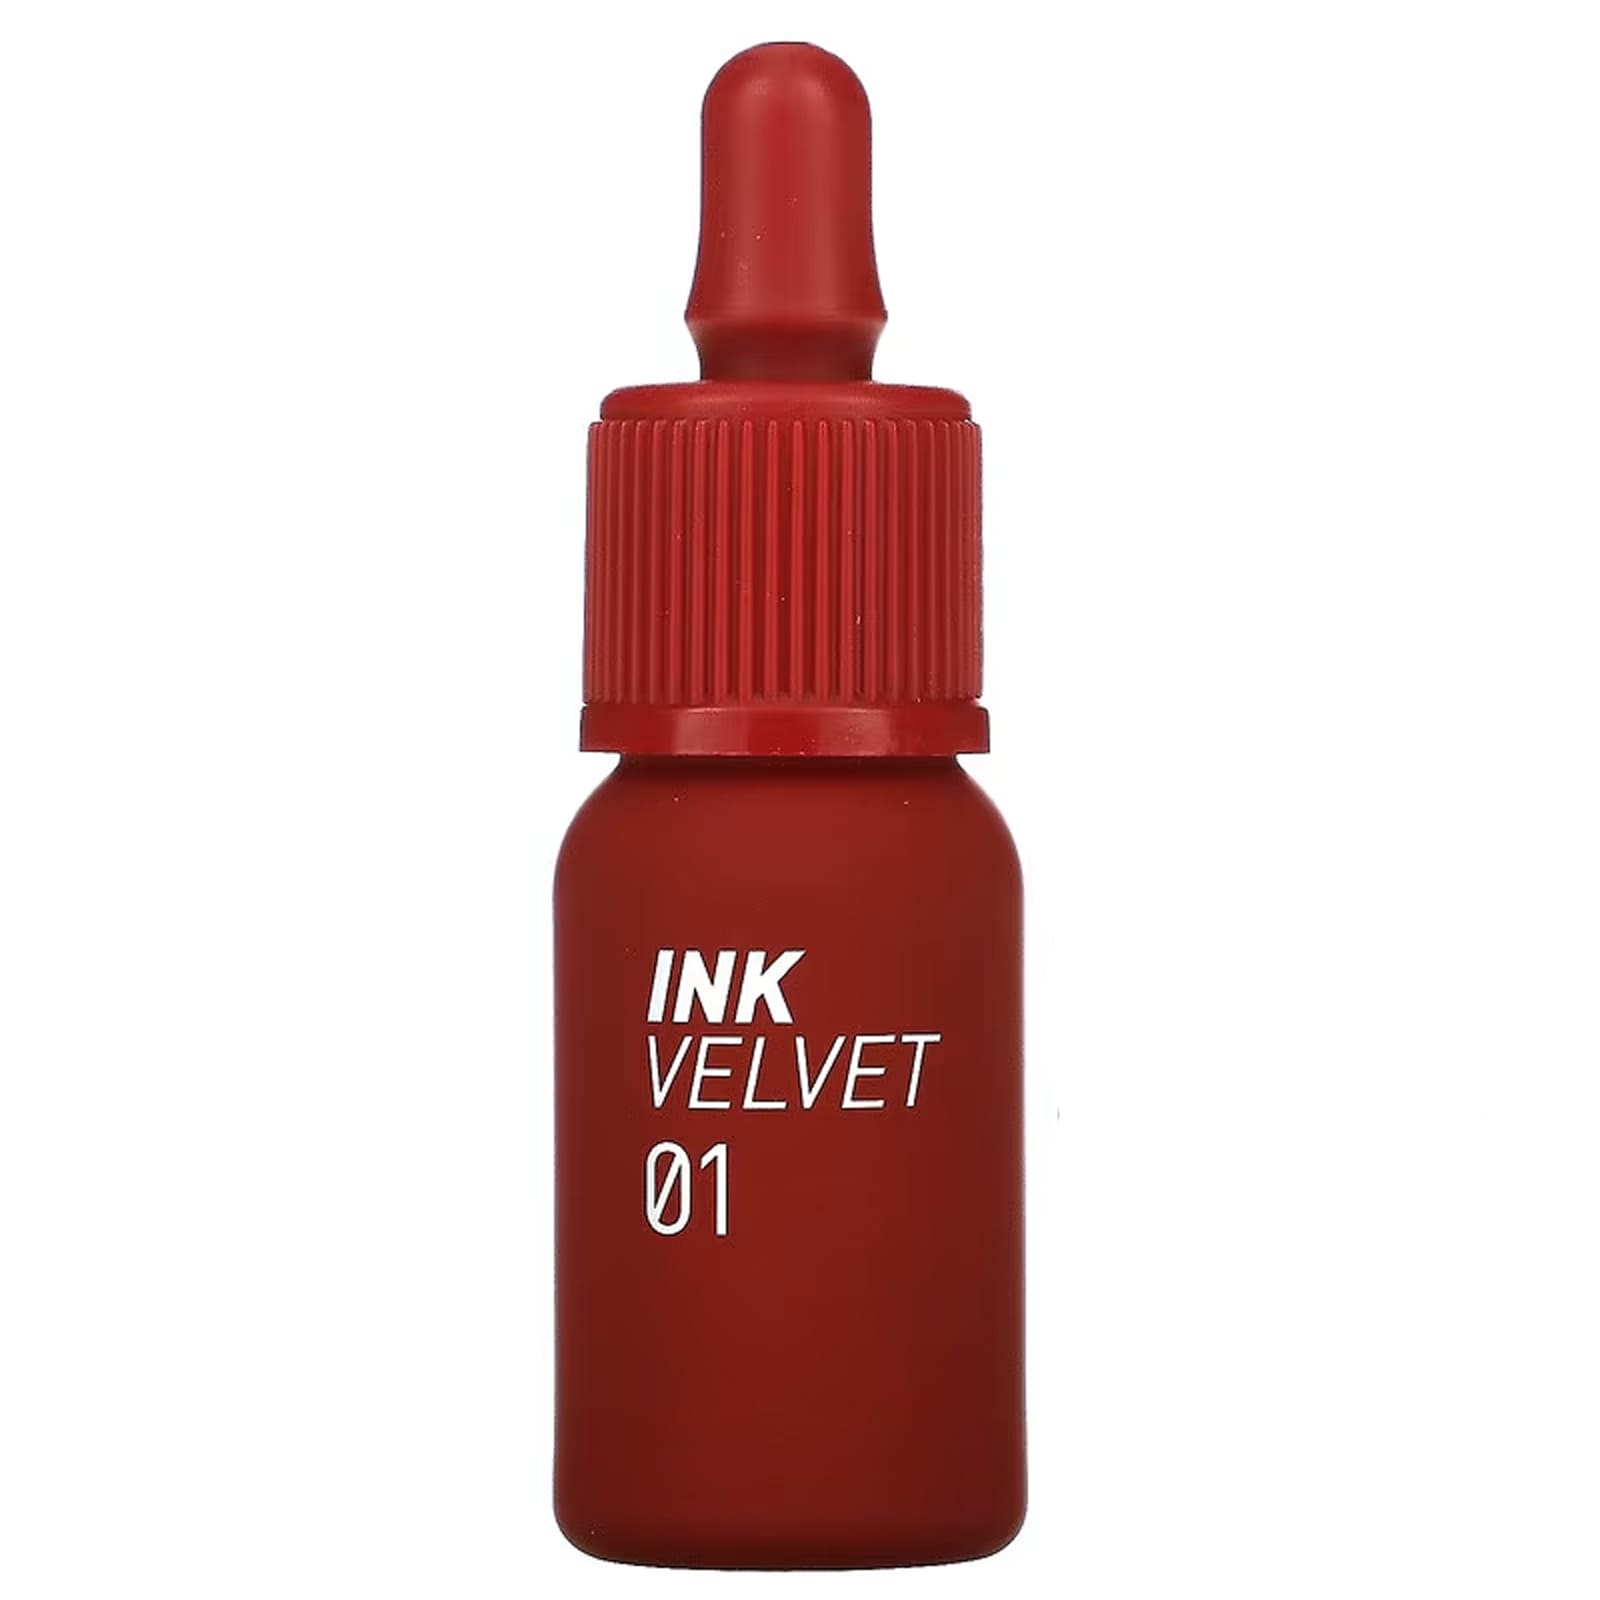 Тинт Peripera Ink Velvet для губ, 4 г тинт peripera ink velvet lip 27 strawberry nude